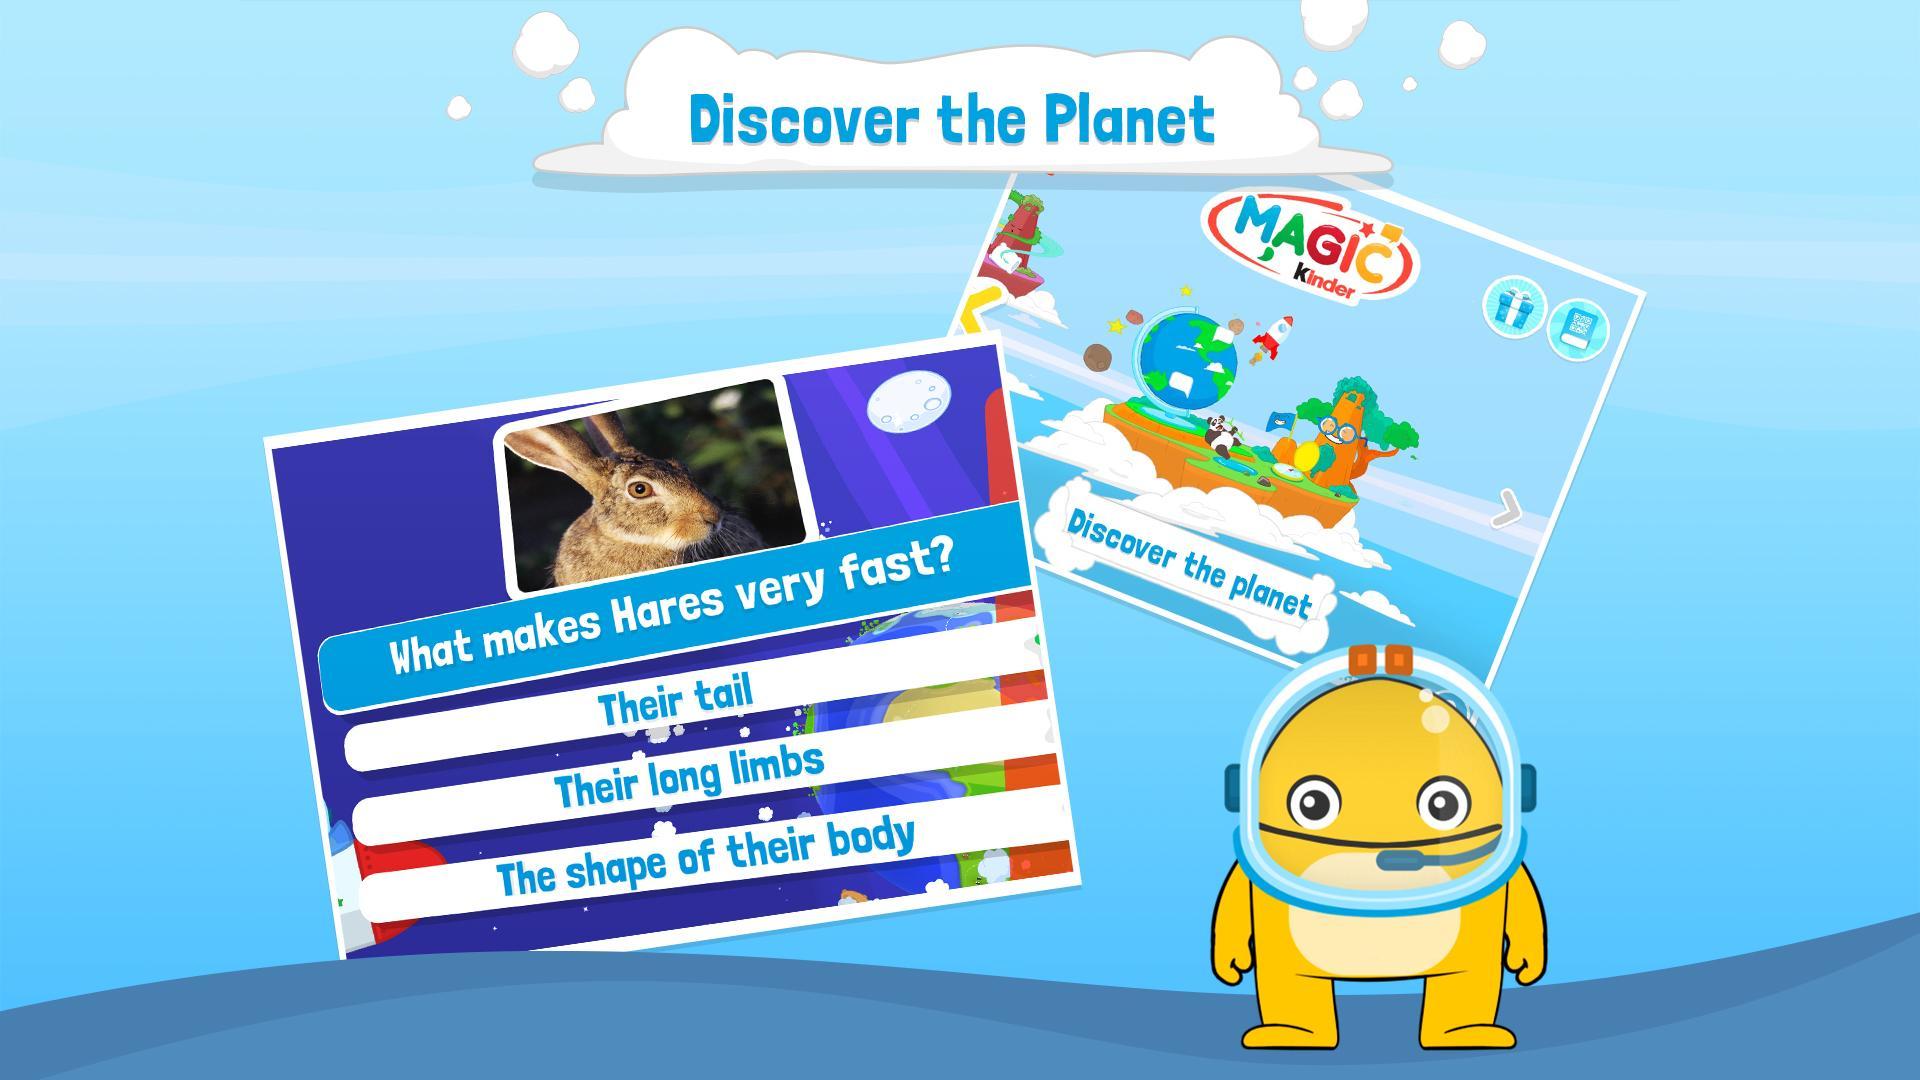 Magic Kinder Official App - Free Family Games 7.1.140 Screenshot 14